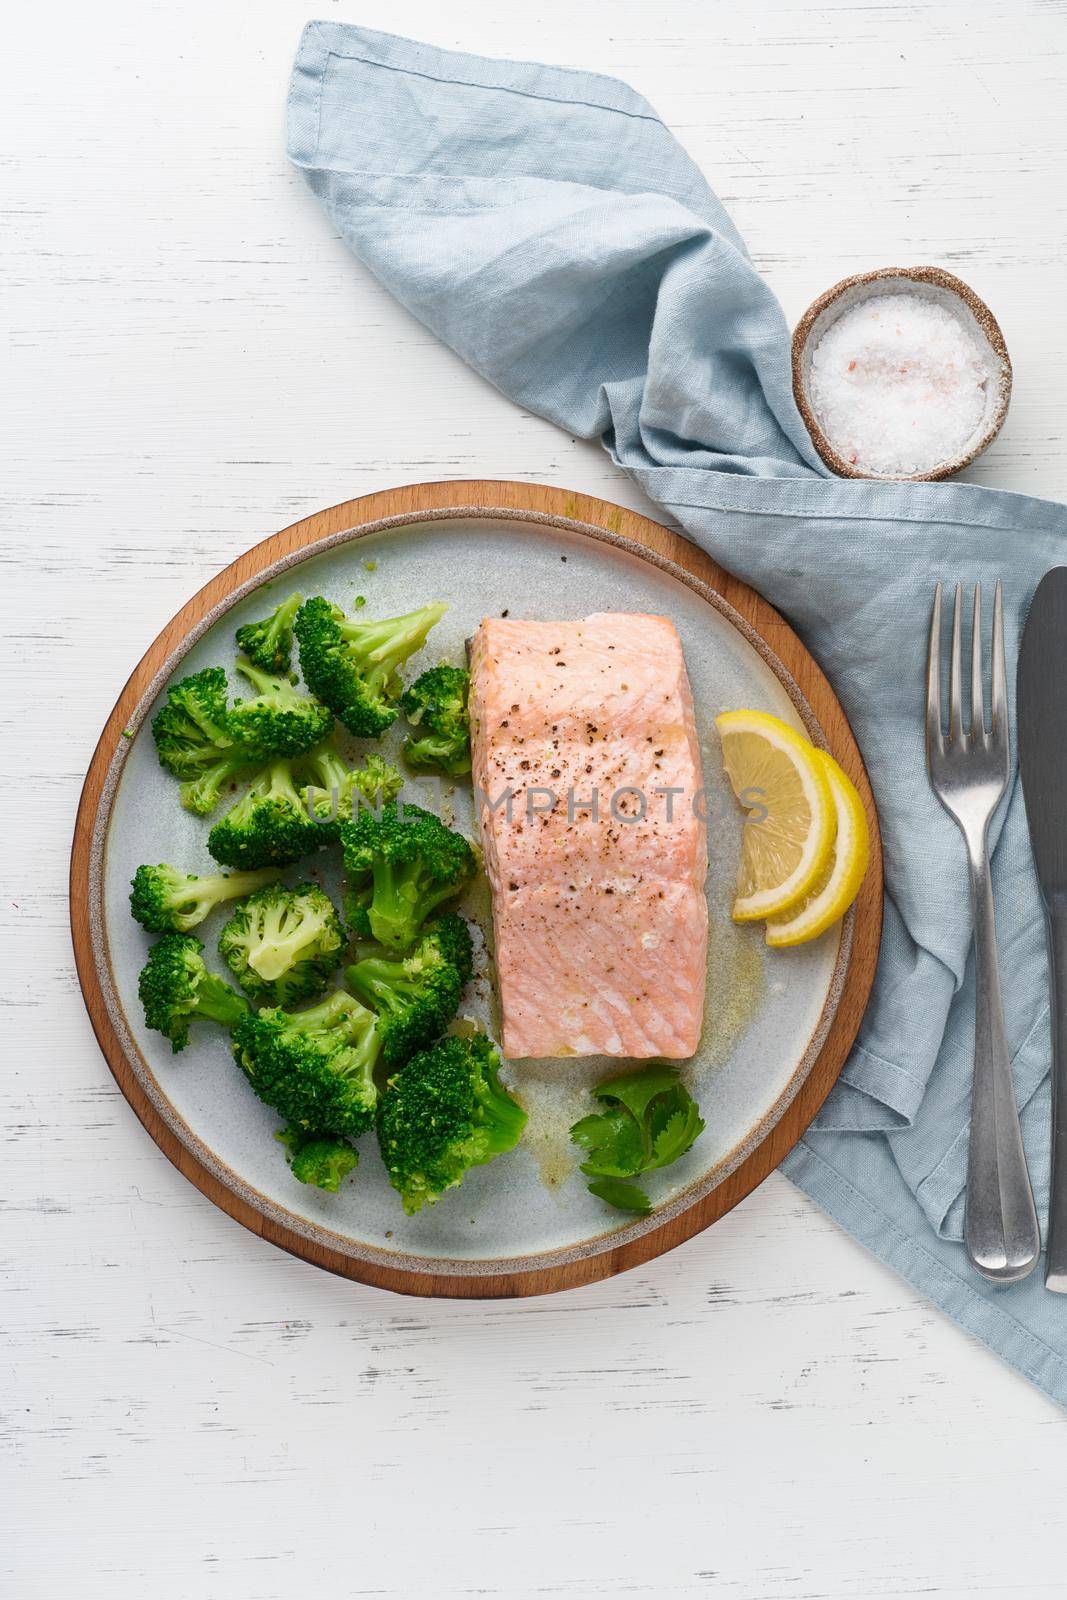 Steam salmon, broccoli, paleo, keto, lshf or dash diet. Mediterranean, Clean eating, balanced food. Gray ceramic plate on white table, vertical